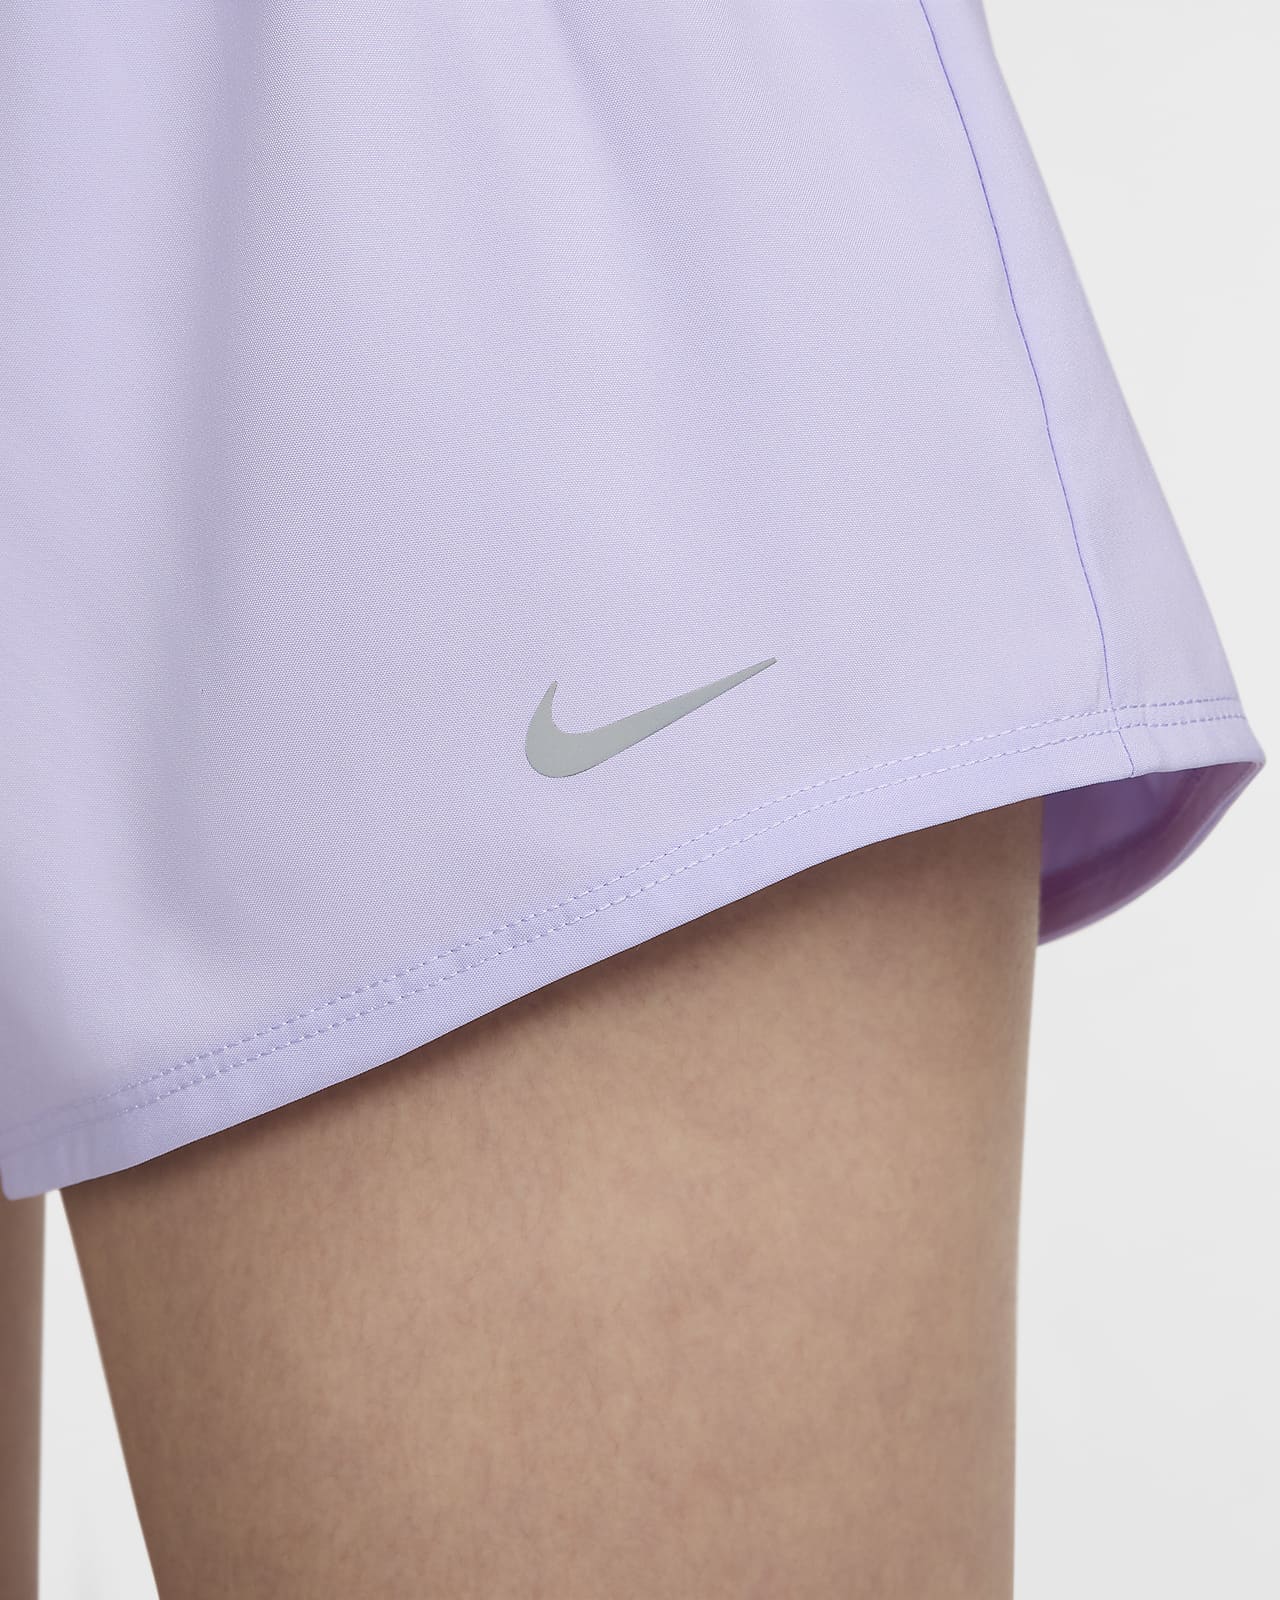 Women's Nike DriFIT One Midrise Brief Lined Shorts :Adobe – iRUN